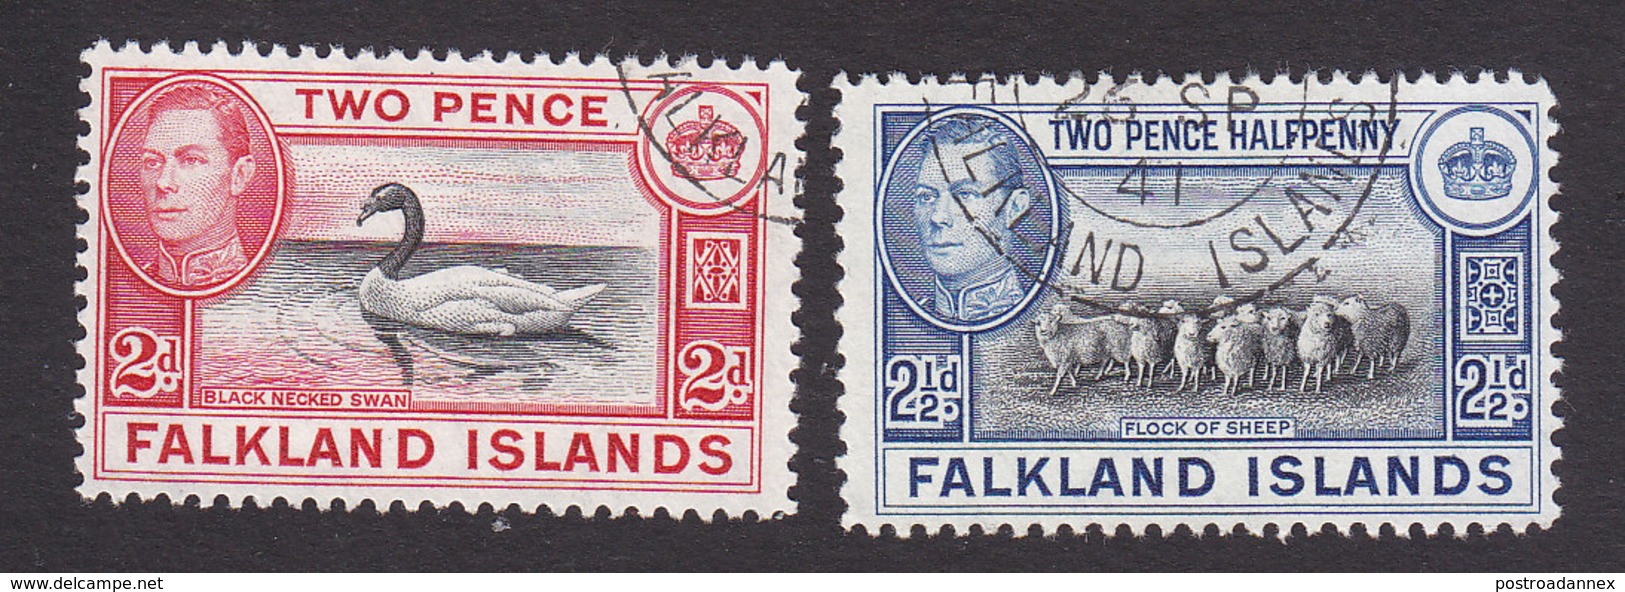 Falkland Islands, Scott #86A, 87, Used, George VI And Scenes Of Falkland Islands, Issued 1938 - Falkland